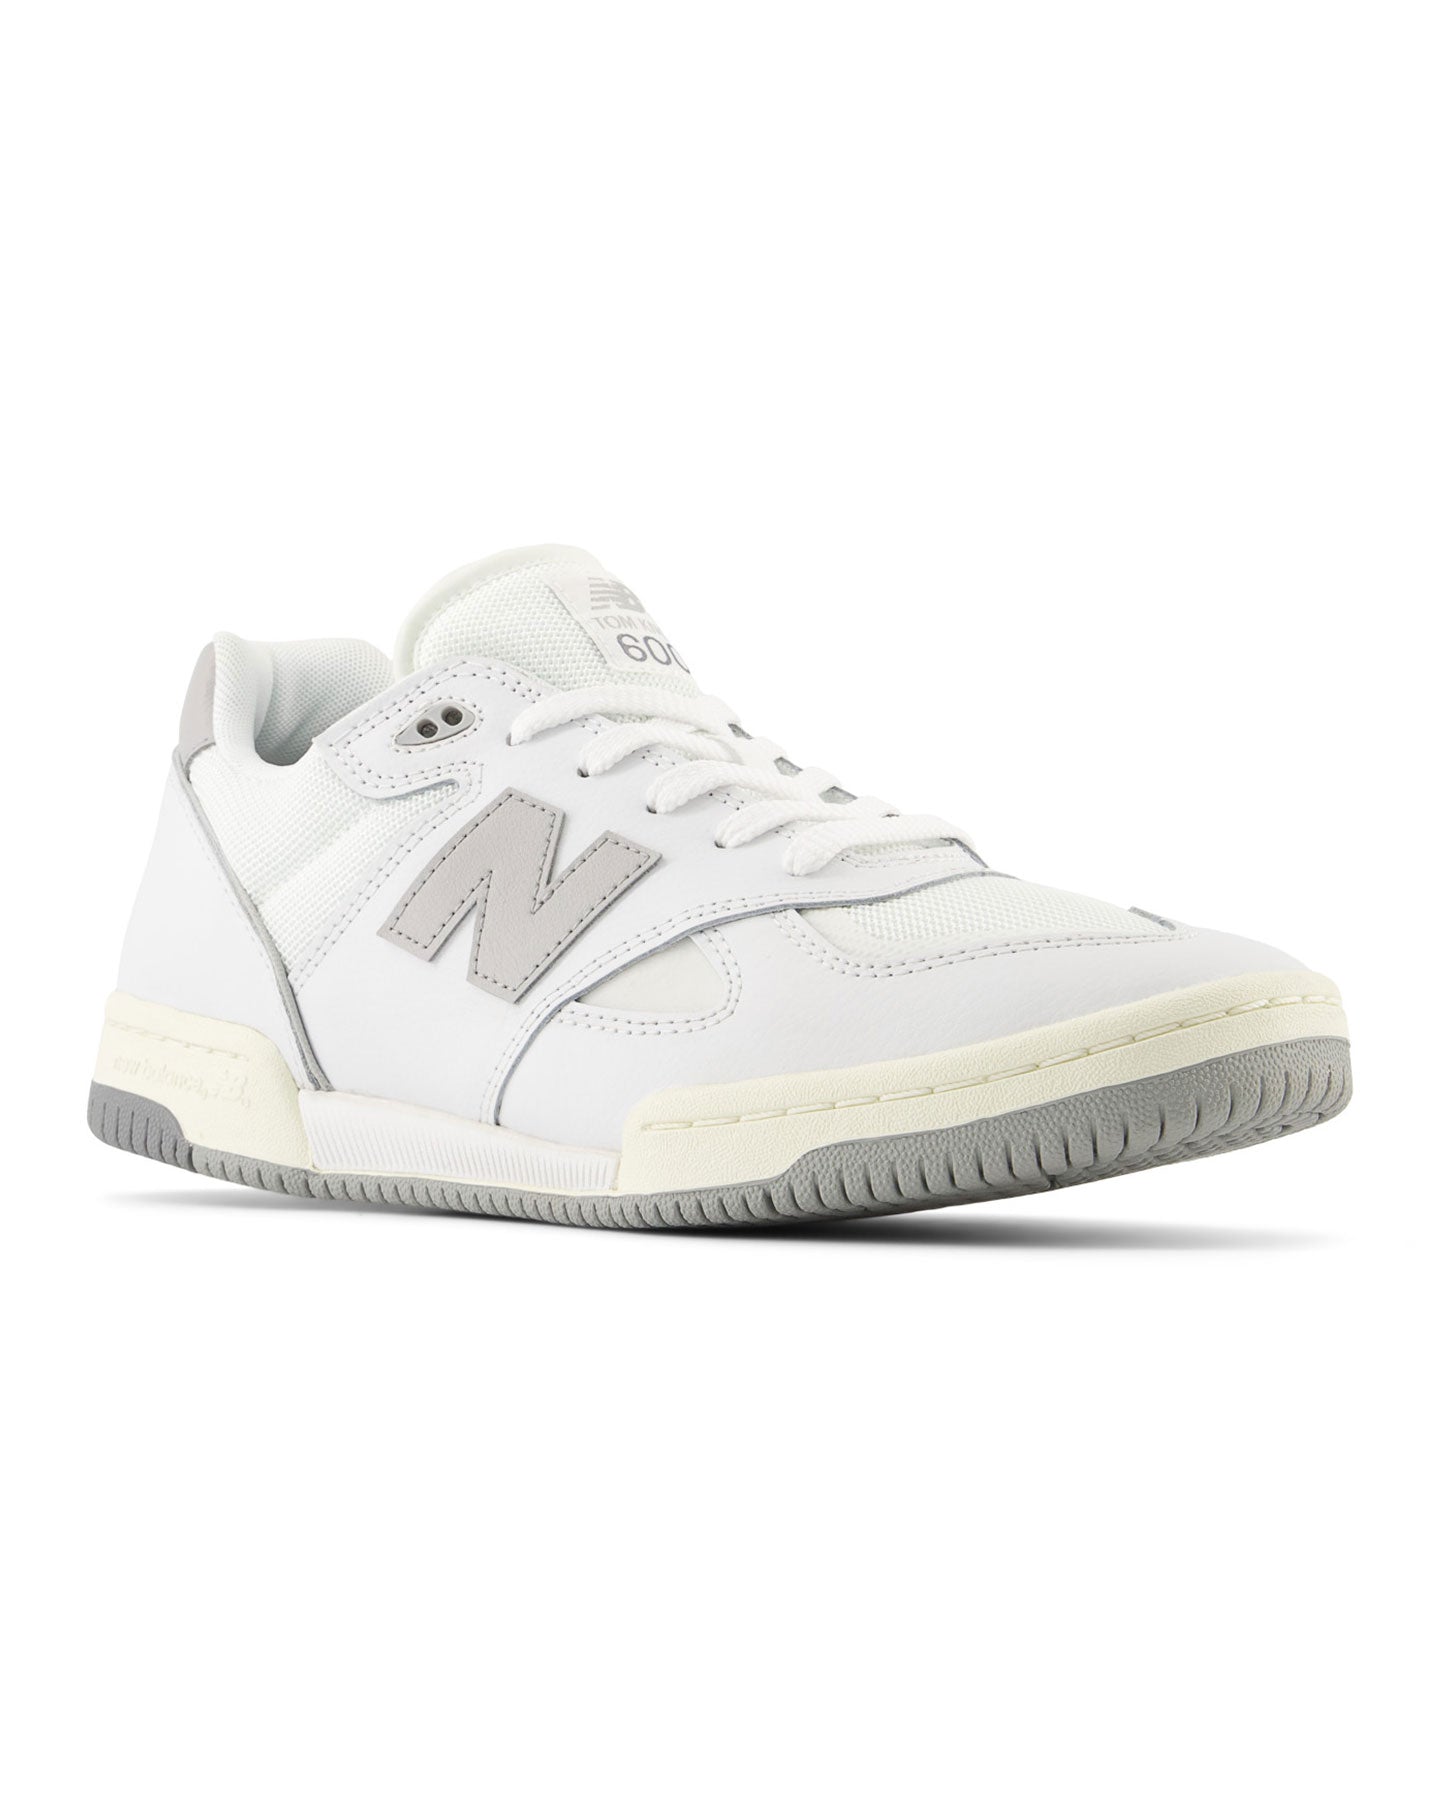 New Balance 600 - White / Grey